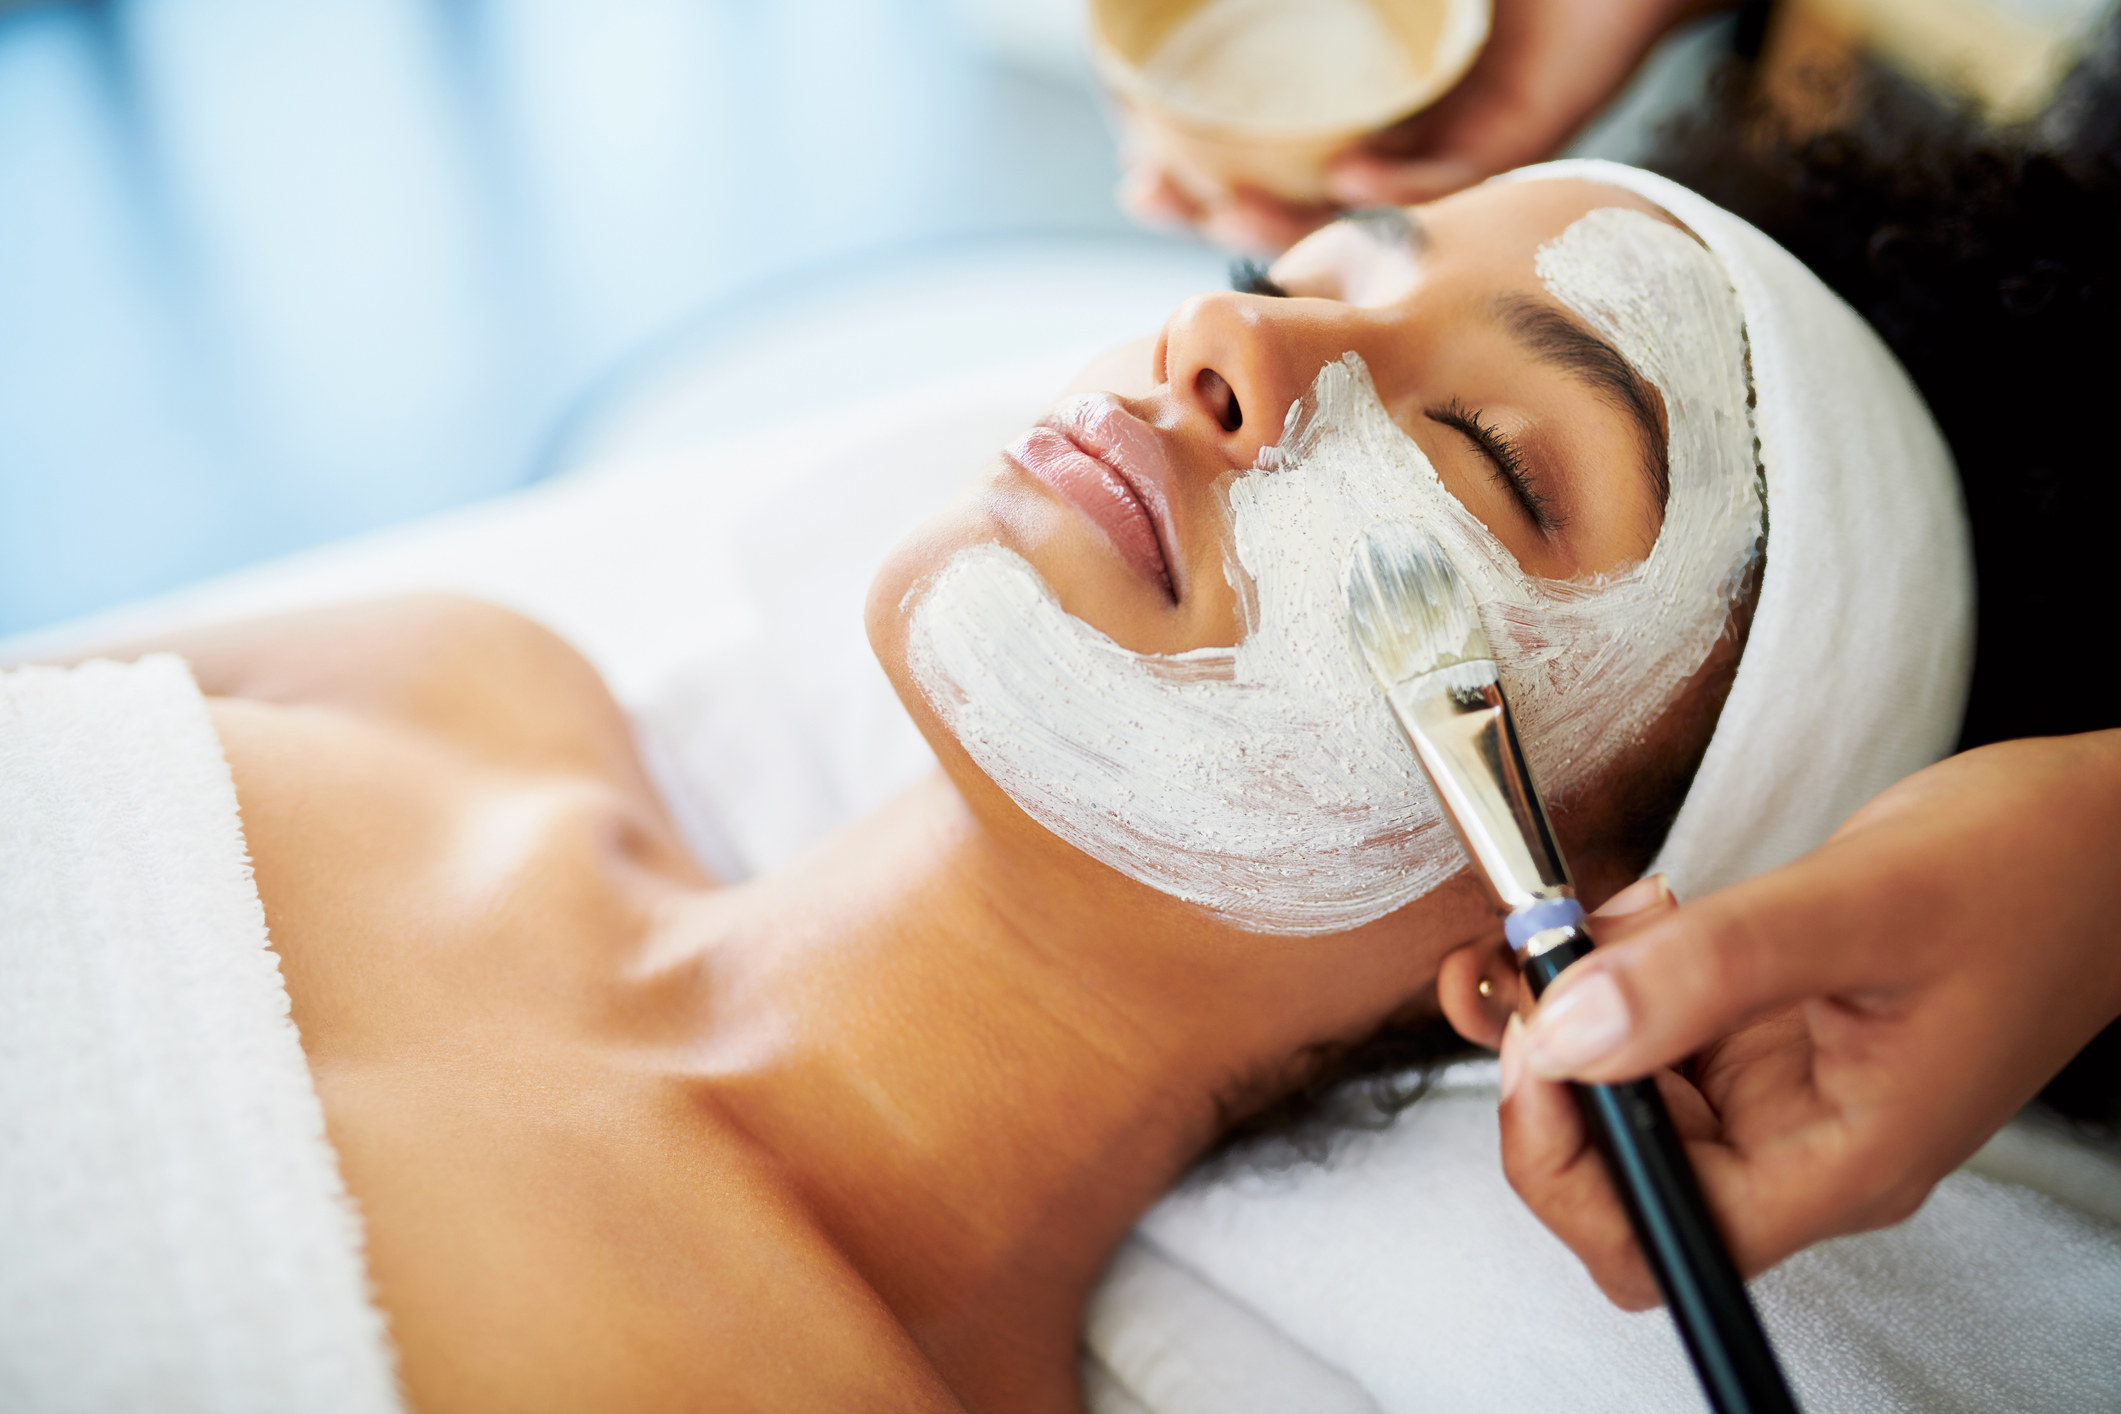 Woman getting a facial at a spa